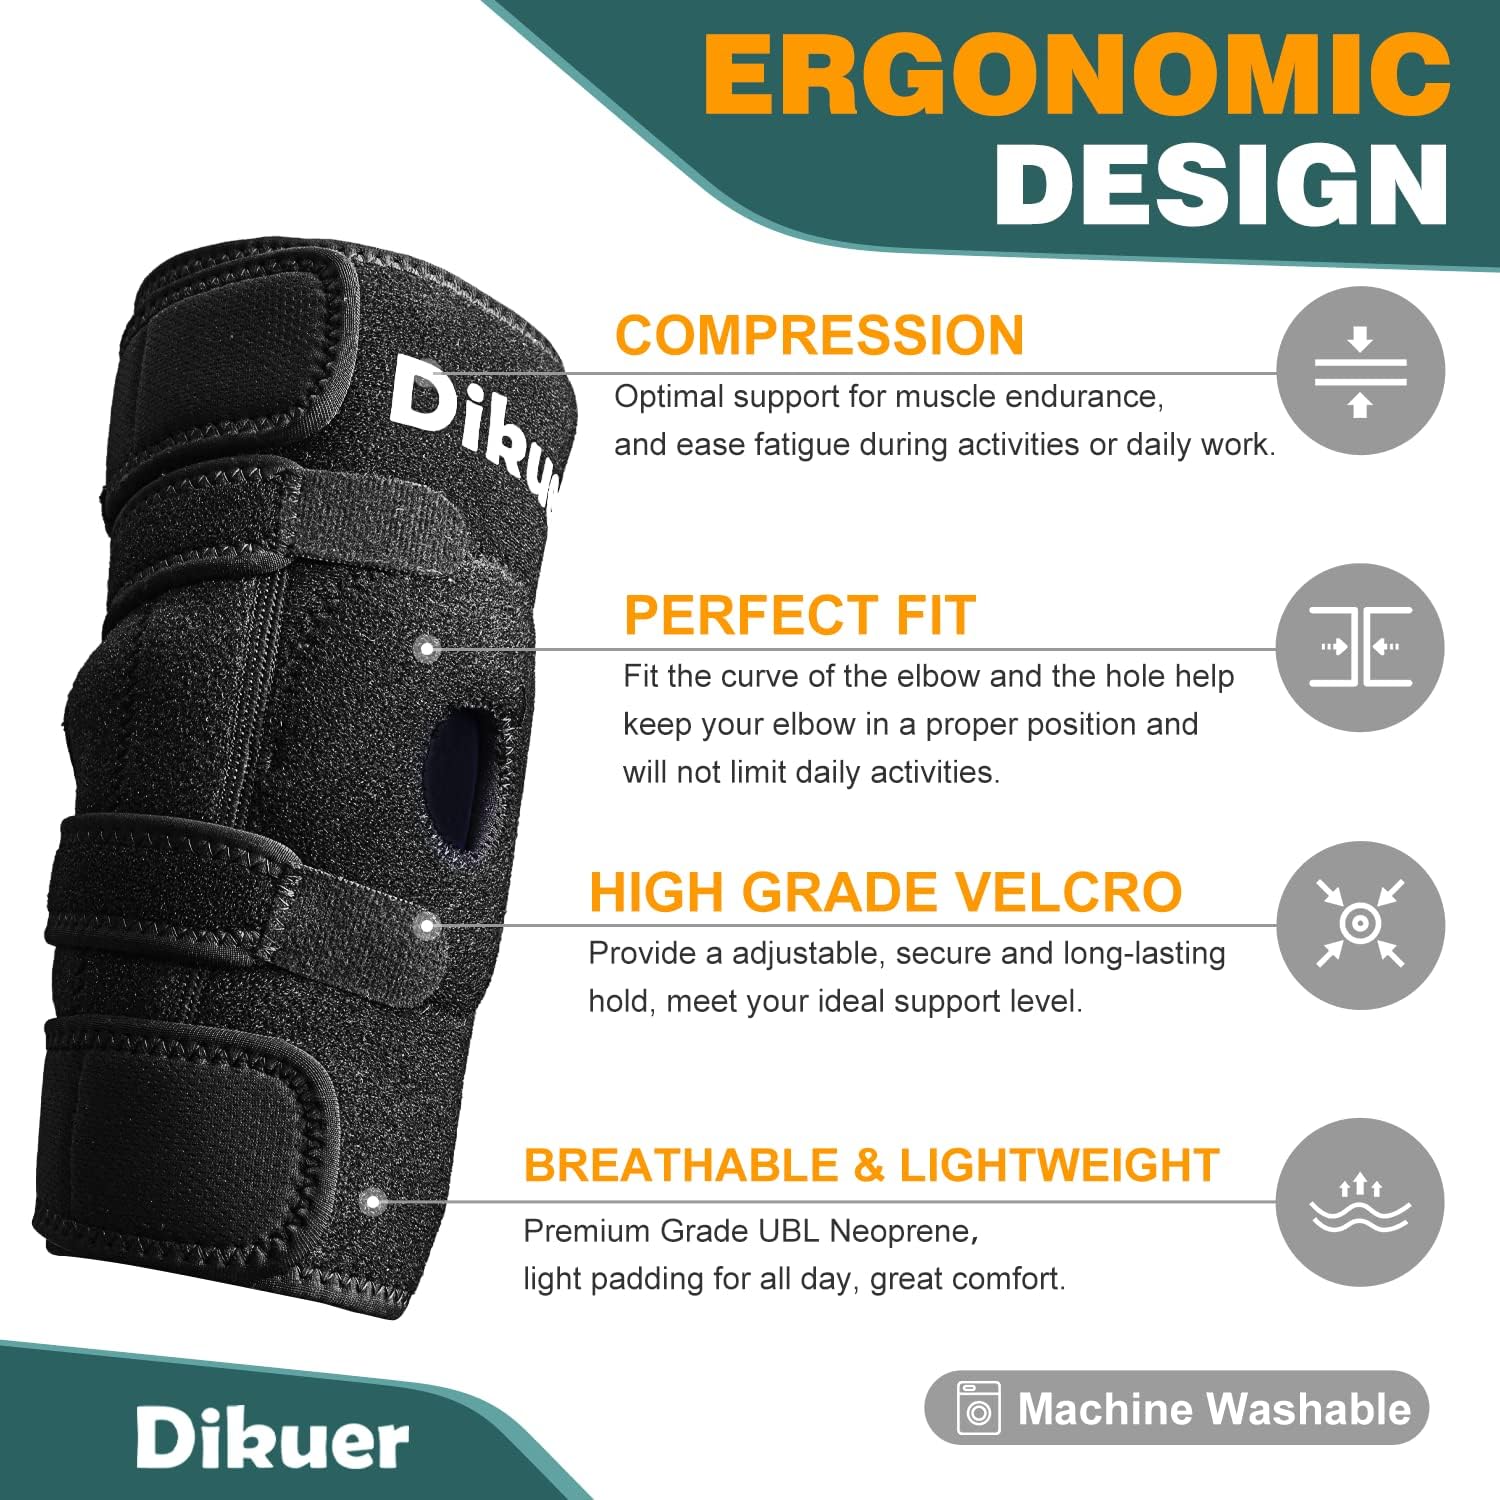 Dikuer Elbow Brace Review